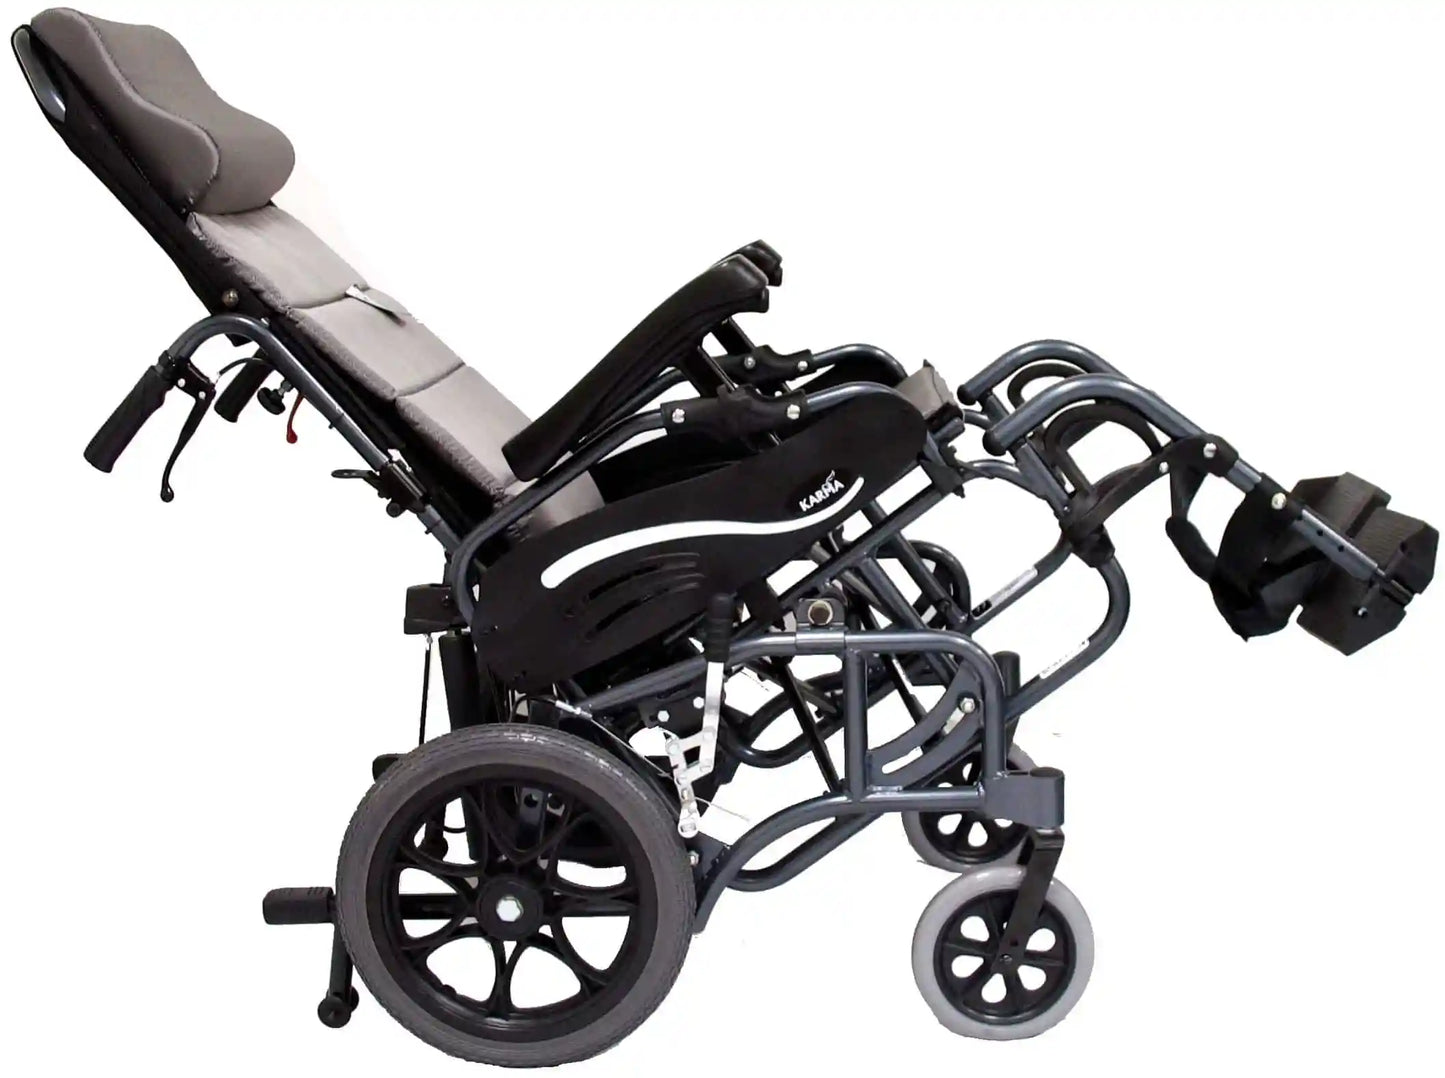 Karman VIP-515-TP Lightweight Tilt-in-Space Transport Wheelchair